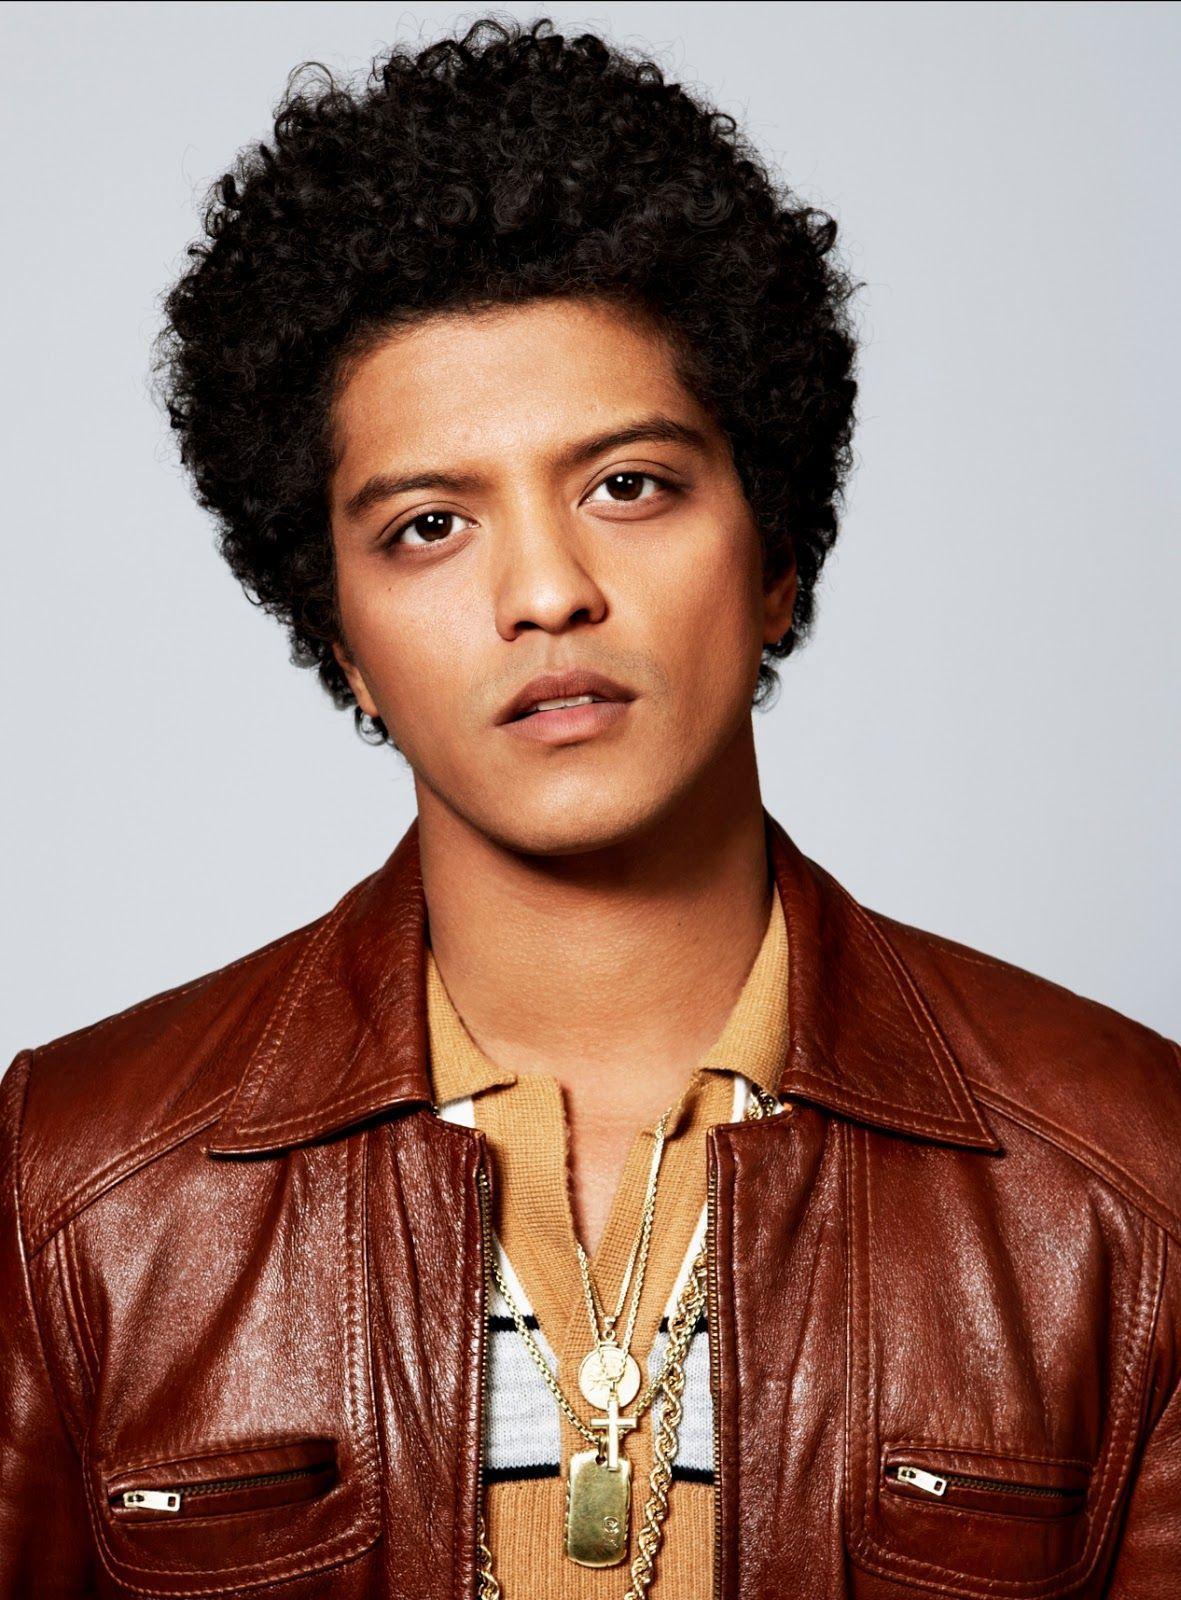 Bruno Mars HD Wallpapers - Top Free Bruno Mars HD Backgrounds ...